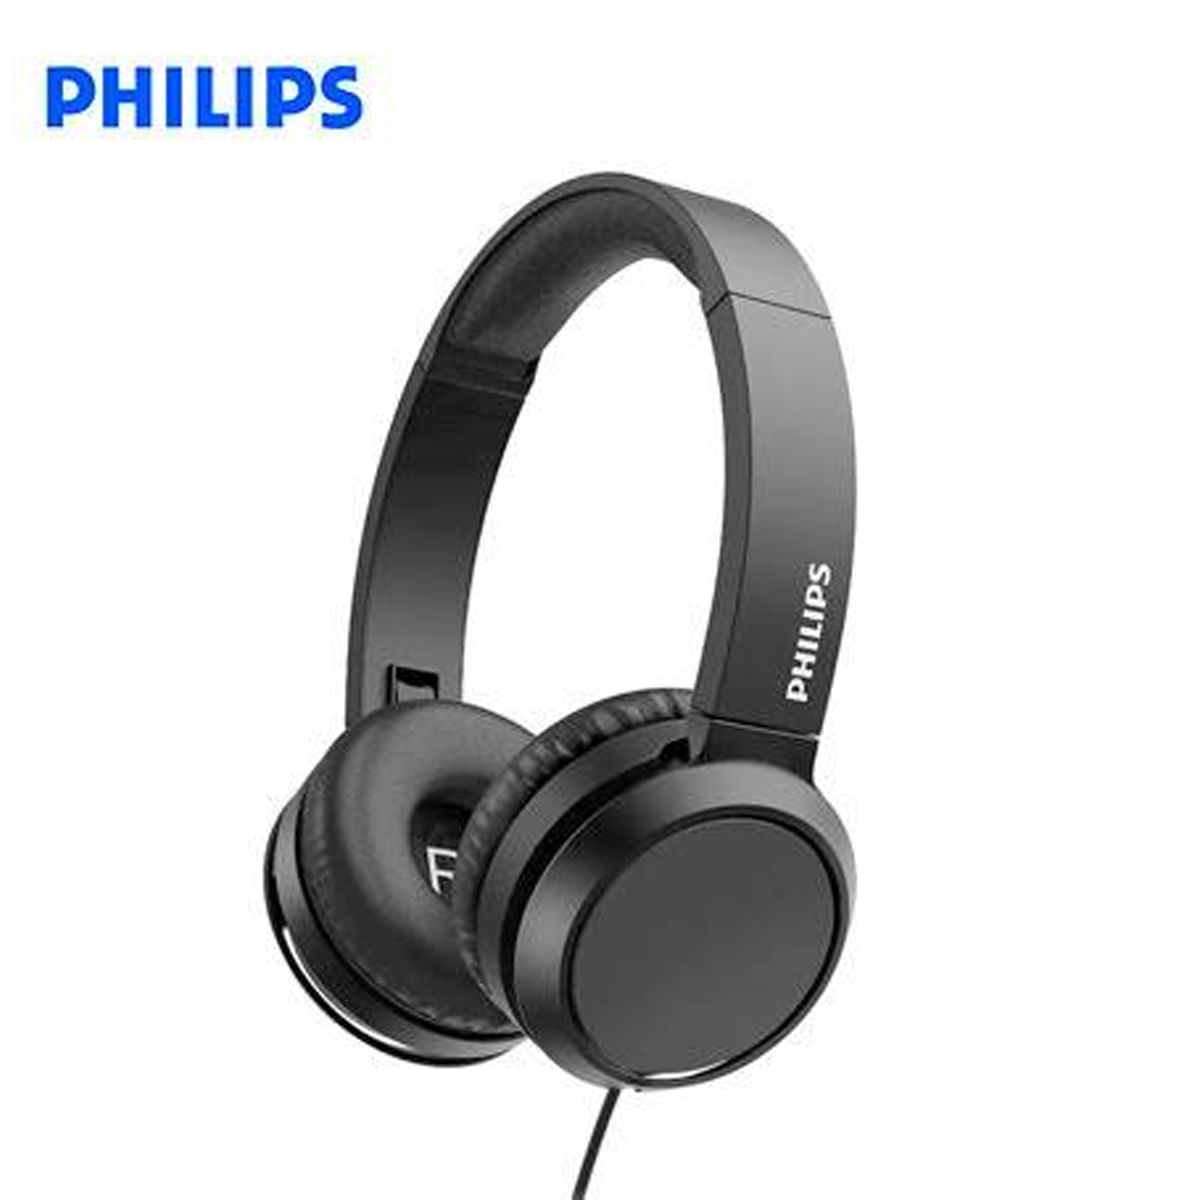 Audifono Con Microfono Philips Tah4105bk 3.5mm Extra Bass Plegable Negro